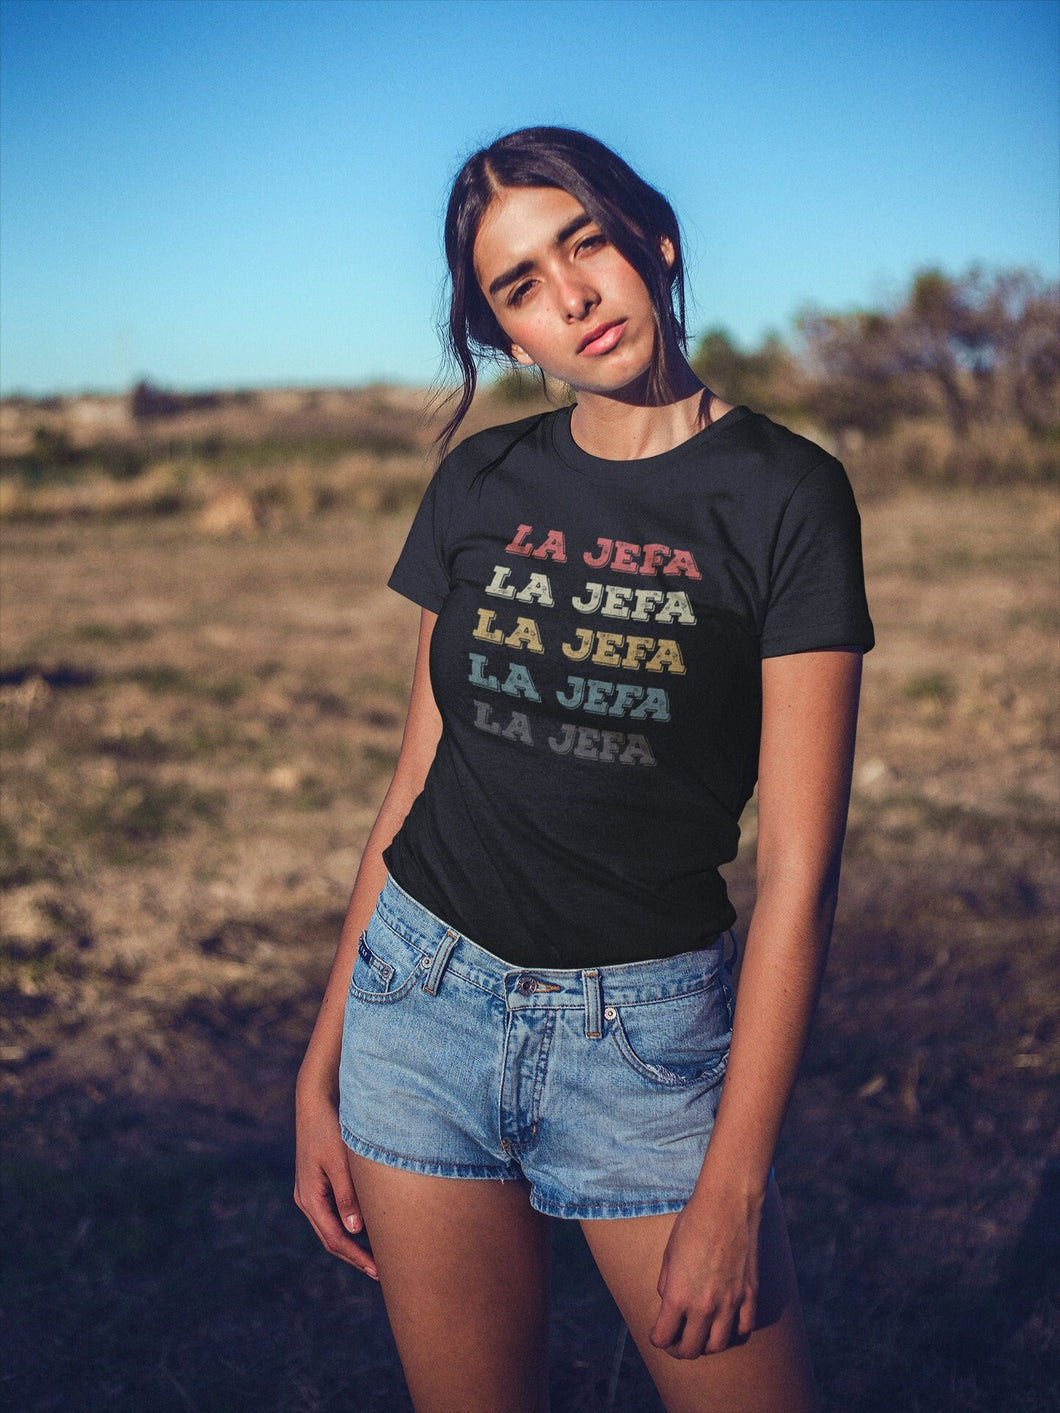 La Jefa Shirt, La Jefa Vintage Shirt, La Jefa Apparel, La Jefa Mama Shirt, Spanish Tshirt Latina Shirt